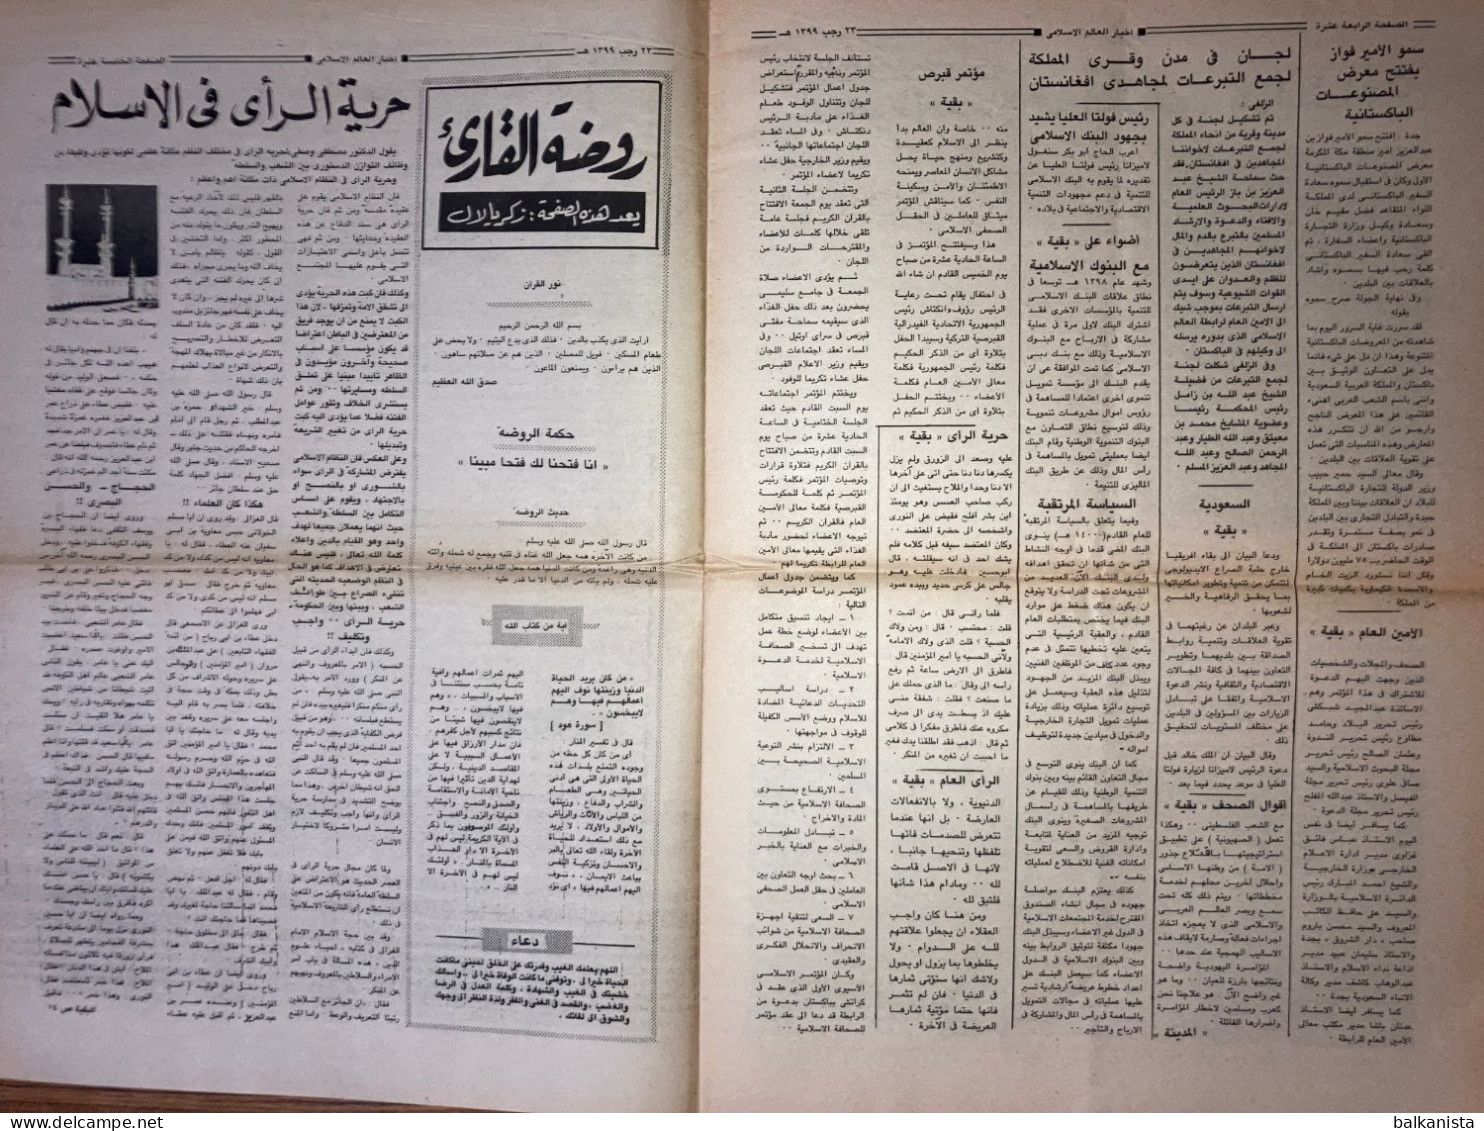 Saudi Arabia Akhbar al-Alam al-Islami Newspaper 19 January 1979